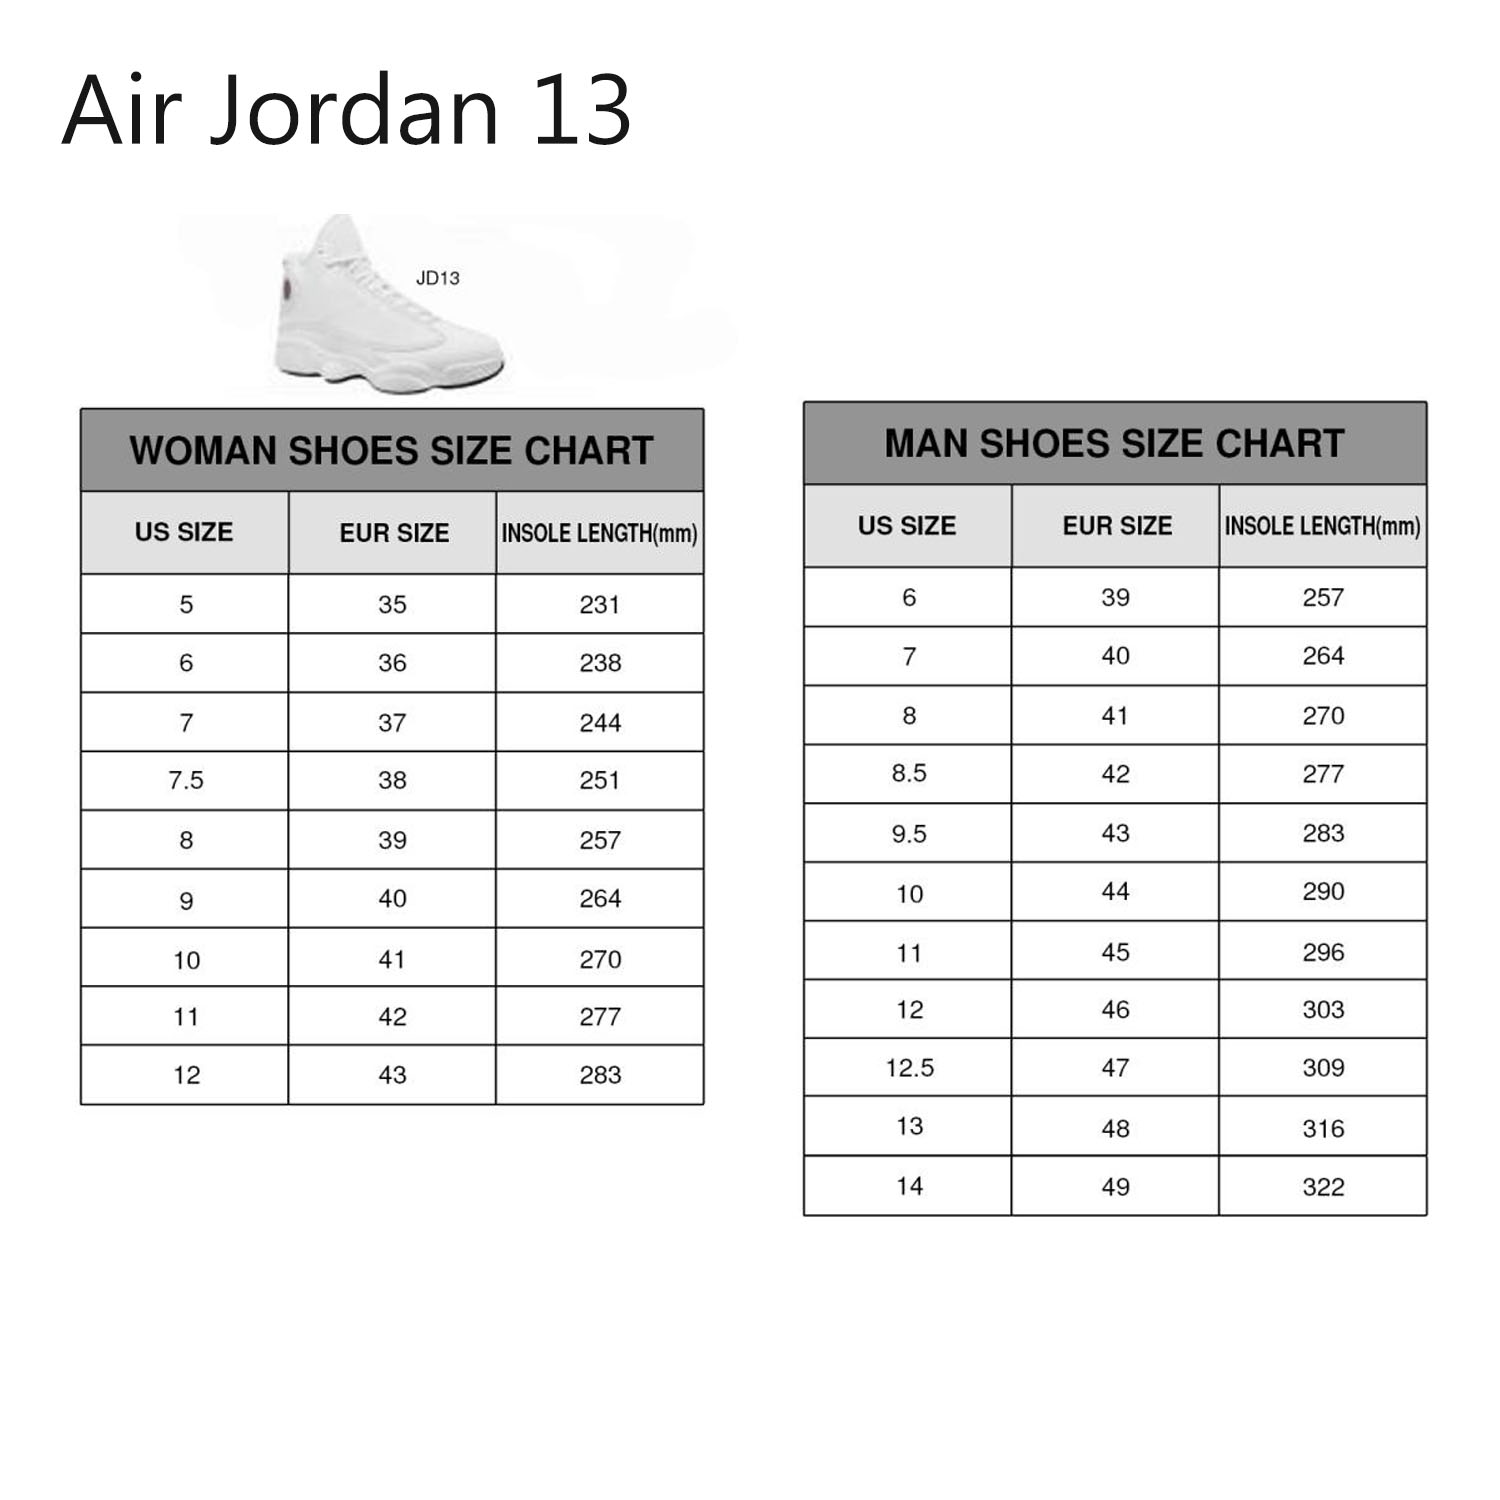 Air Jordan 13 Size Chartpx Pittsburgh Steelers Simple Design Air Jordan 13 Shoes Gift For Fans